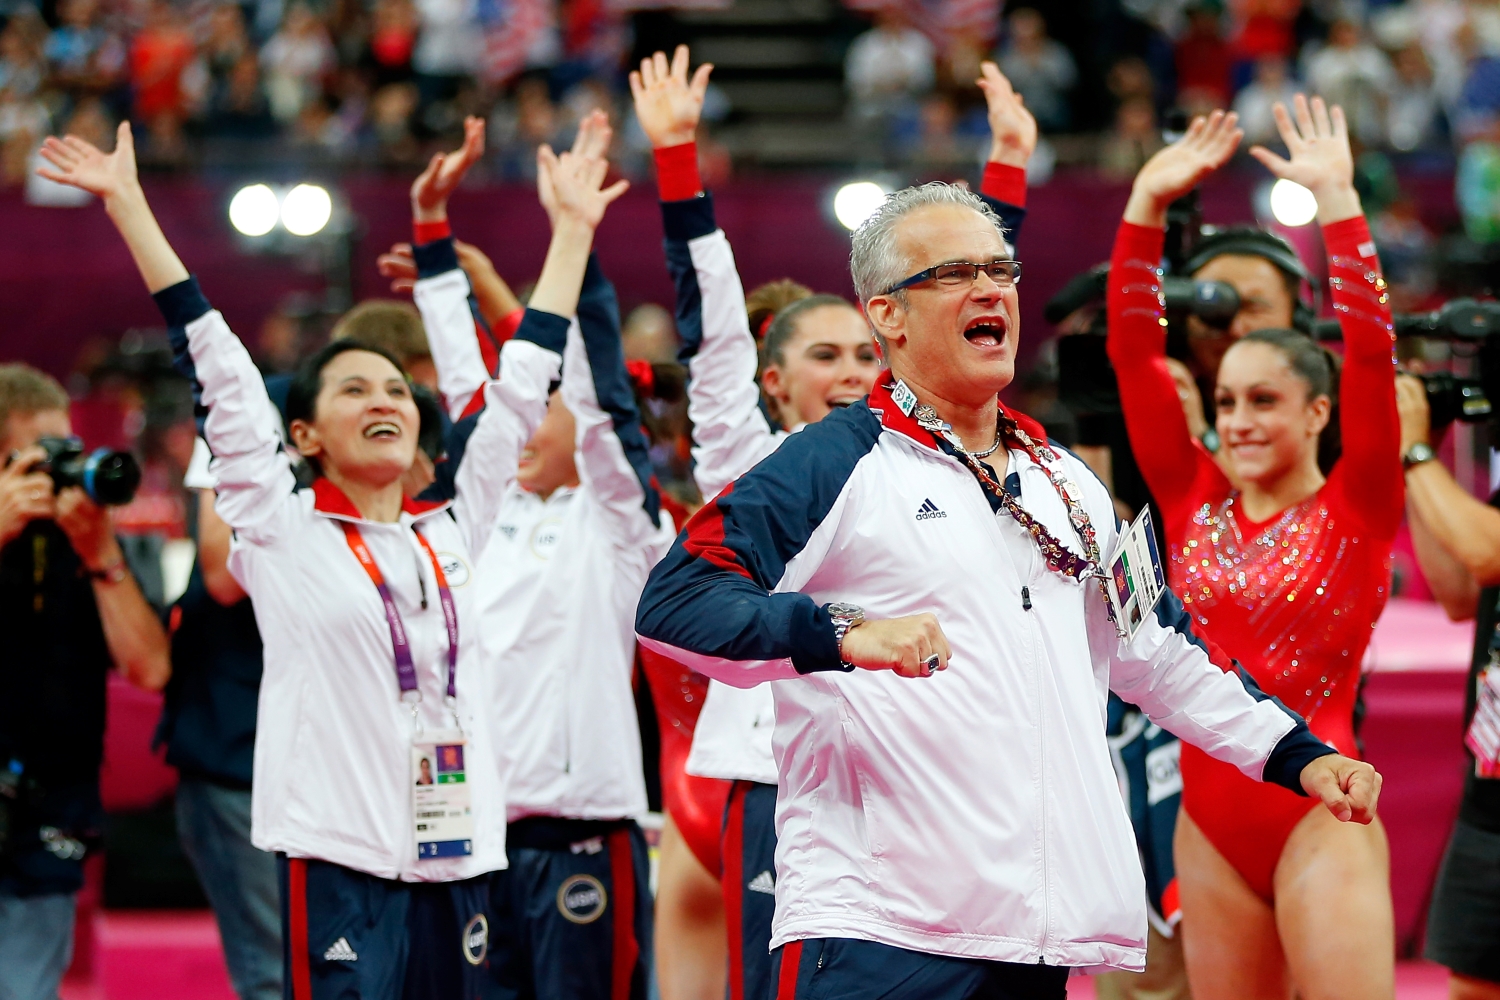 United States women's gymnastics coach John Geddert celebrates at the London 2012 Olympic Games.